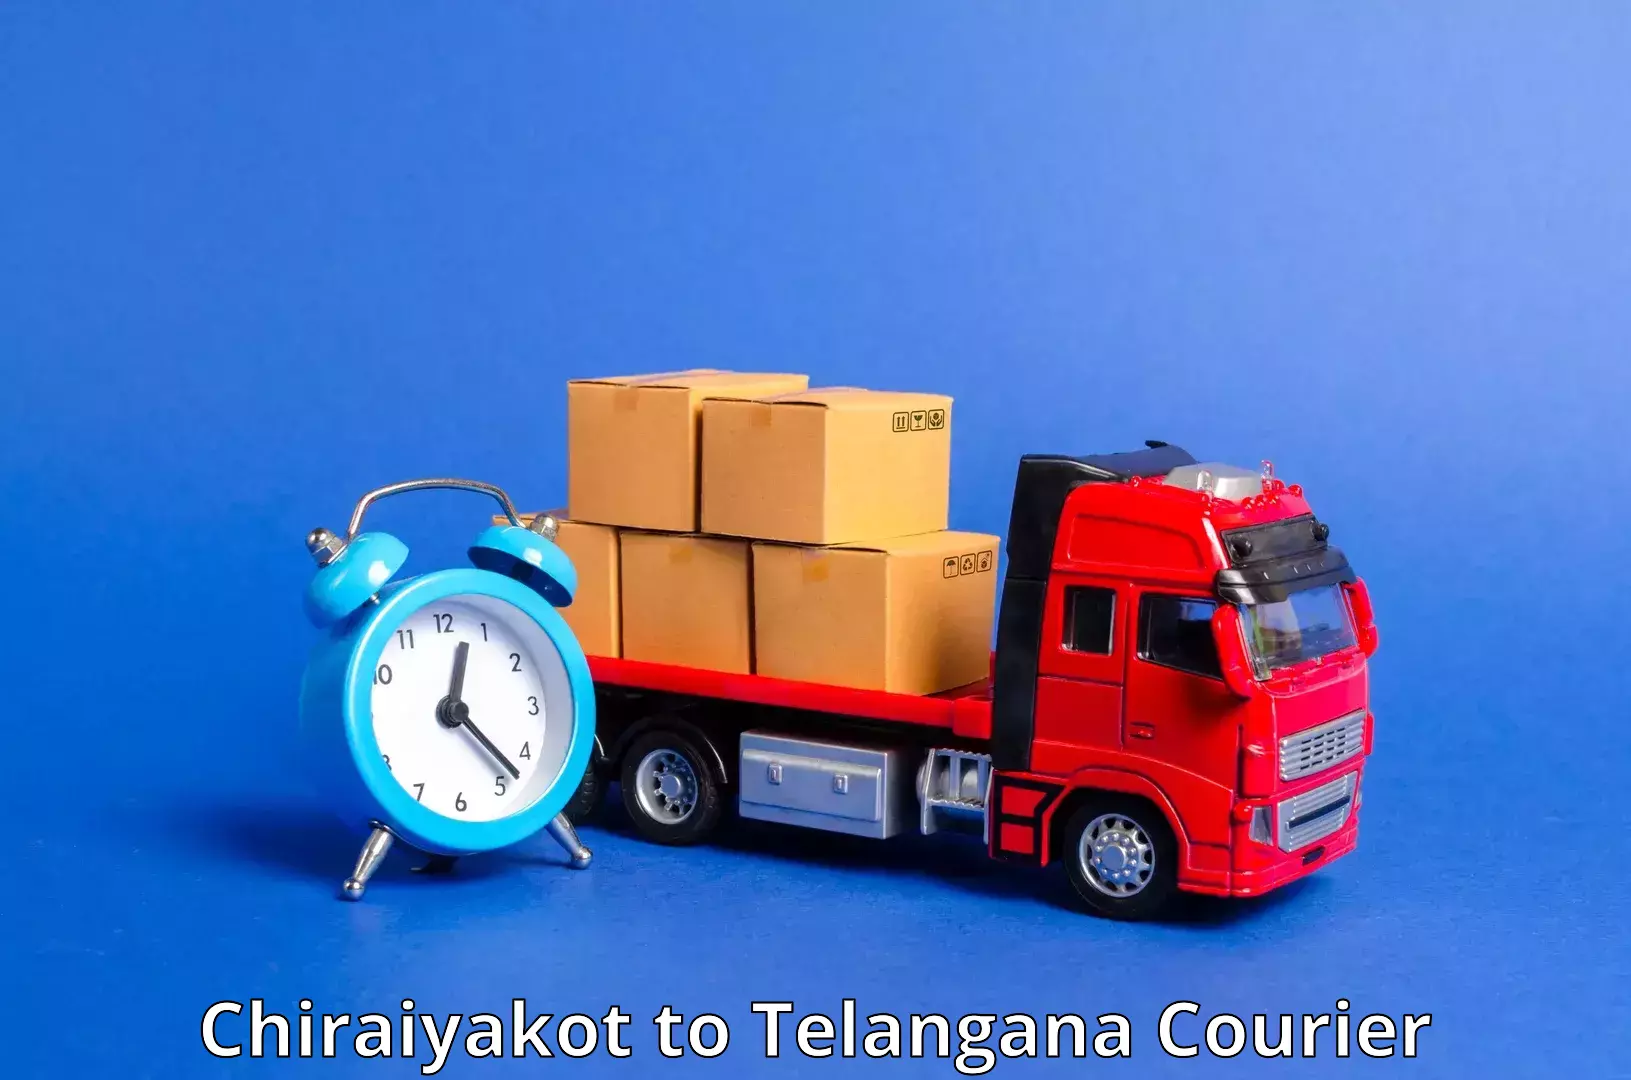 Courier service innovation Chiraiyakot to Khairatabad